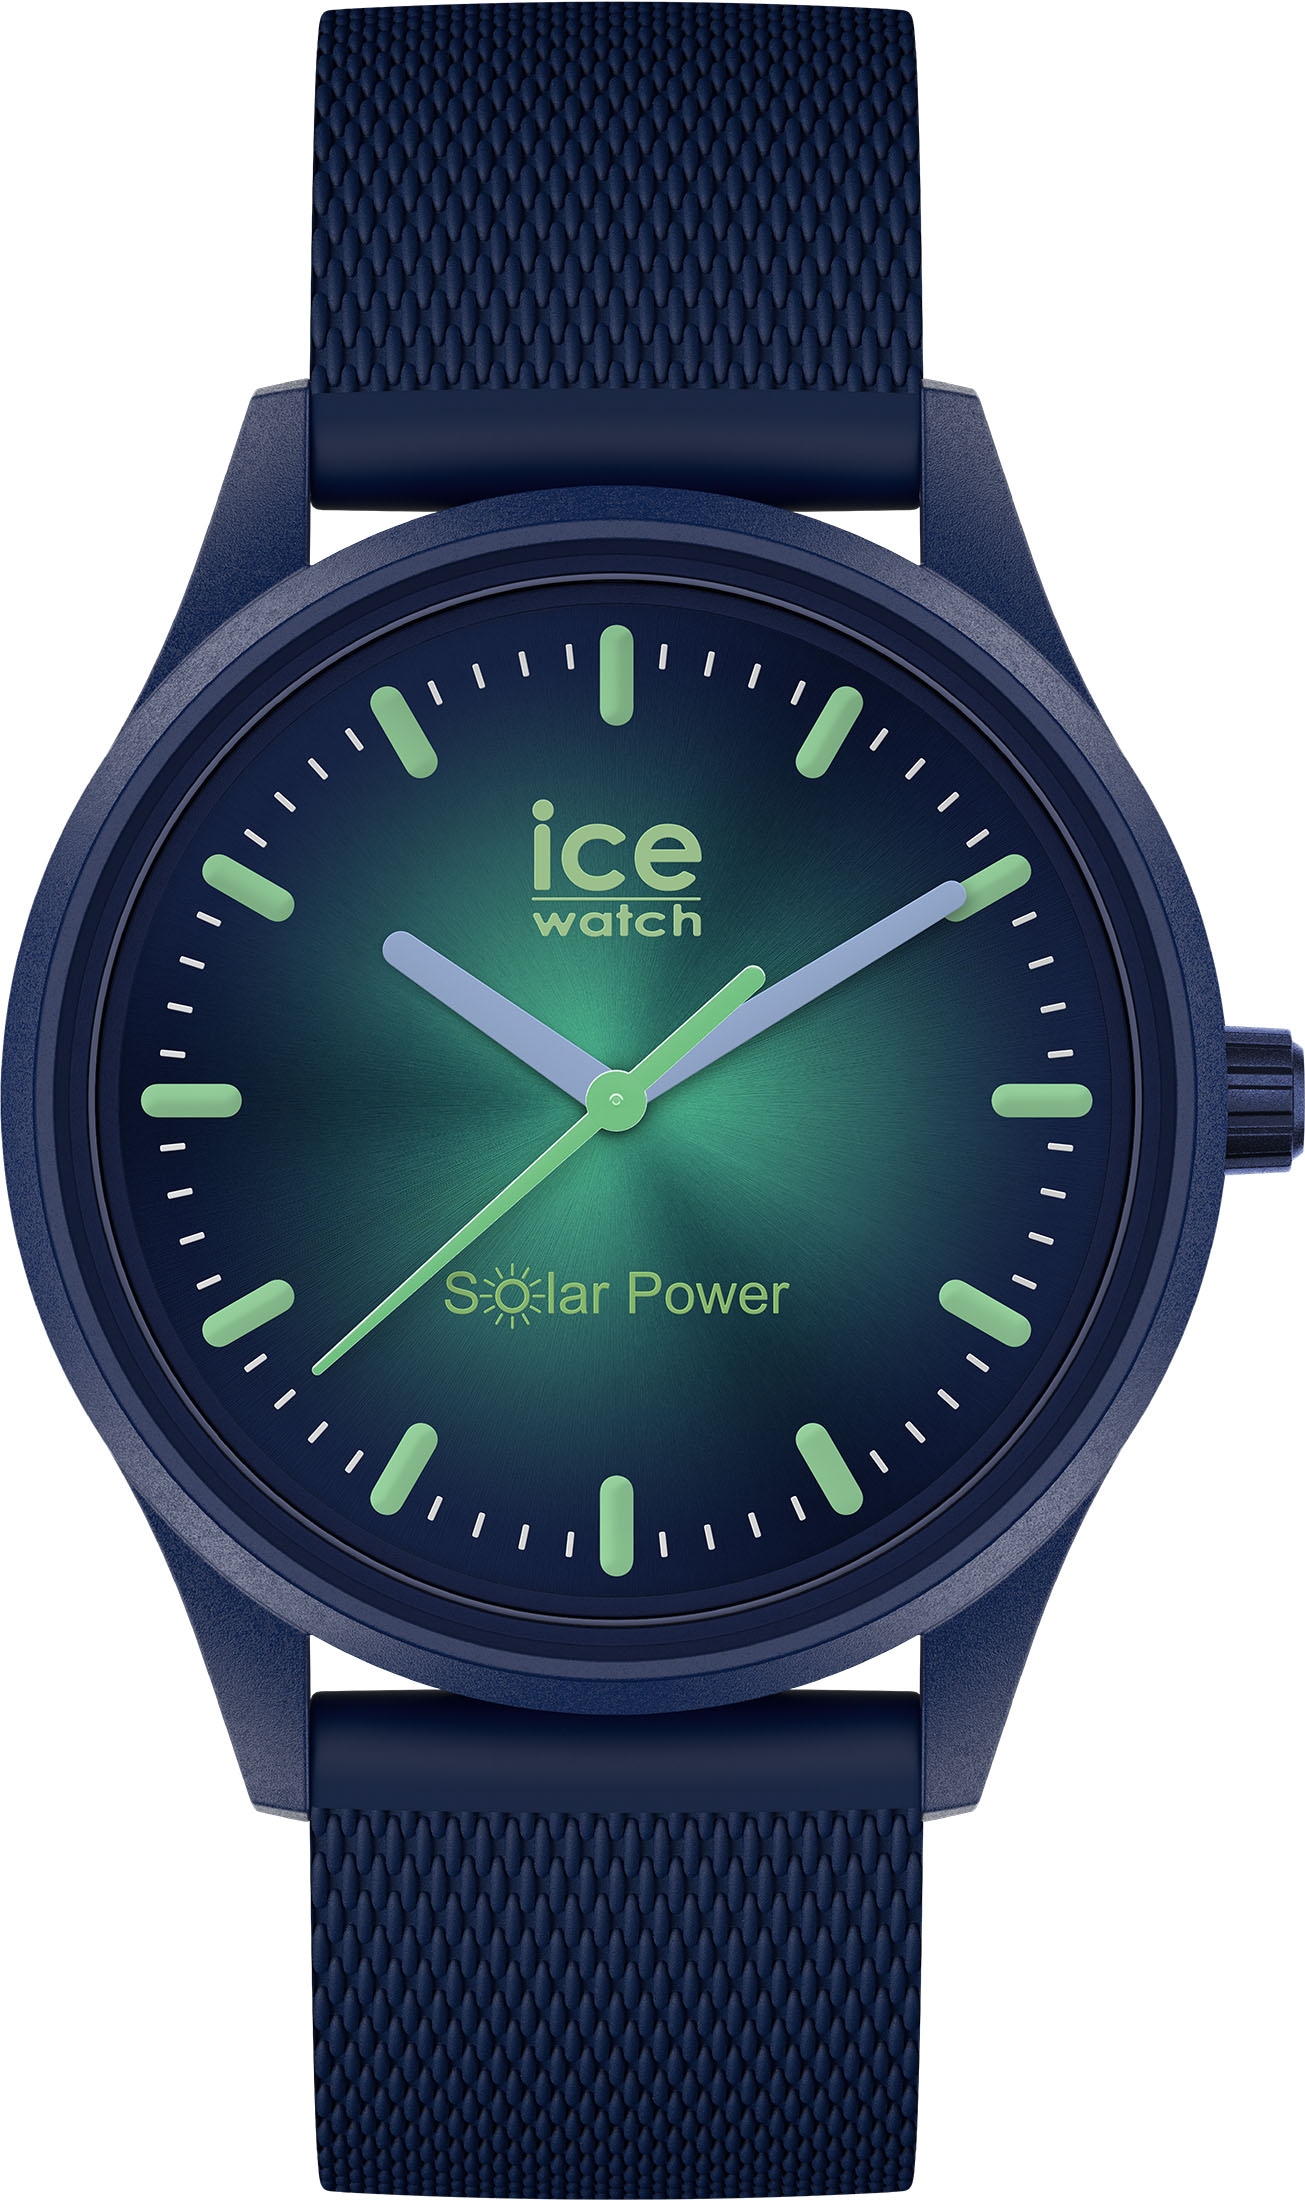 - OTTO 019032« »ICE ice-watch kaufen Borealis, online bei solar Solaruhr power